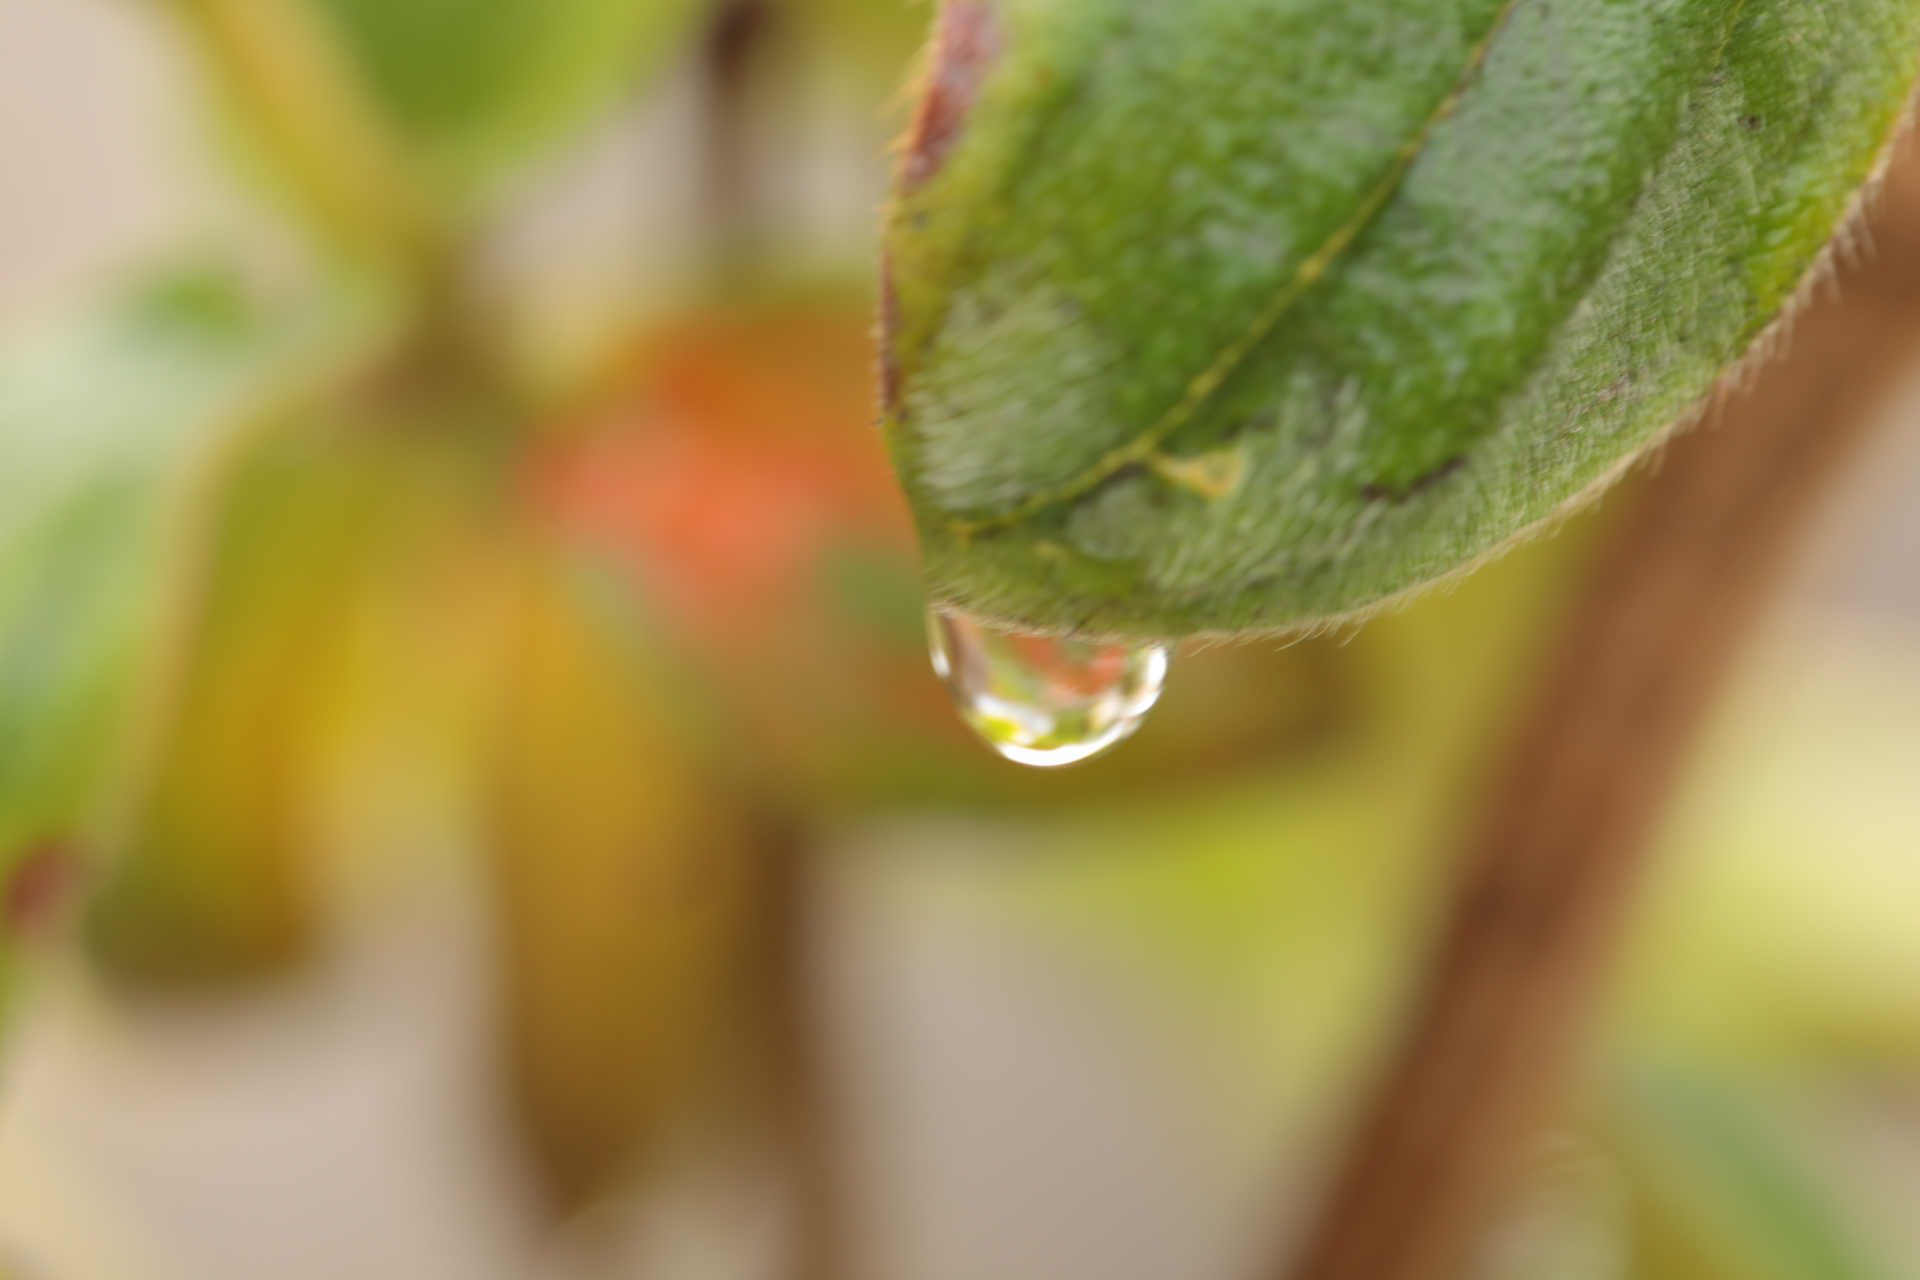 Raindrop Hanging from Leaf (Jan 23, 2021)